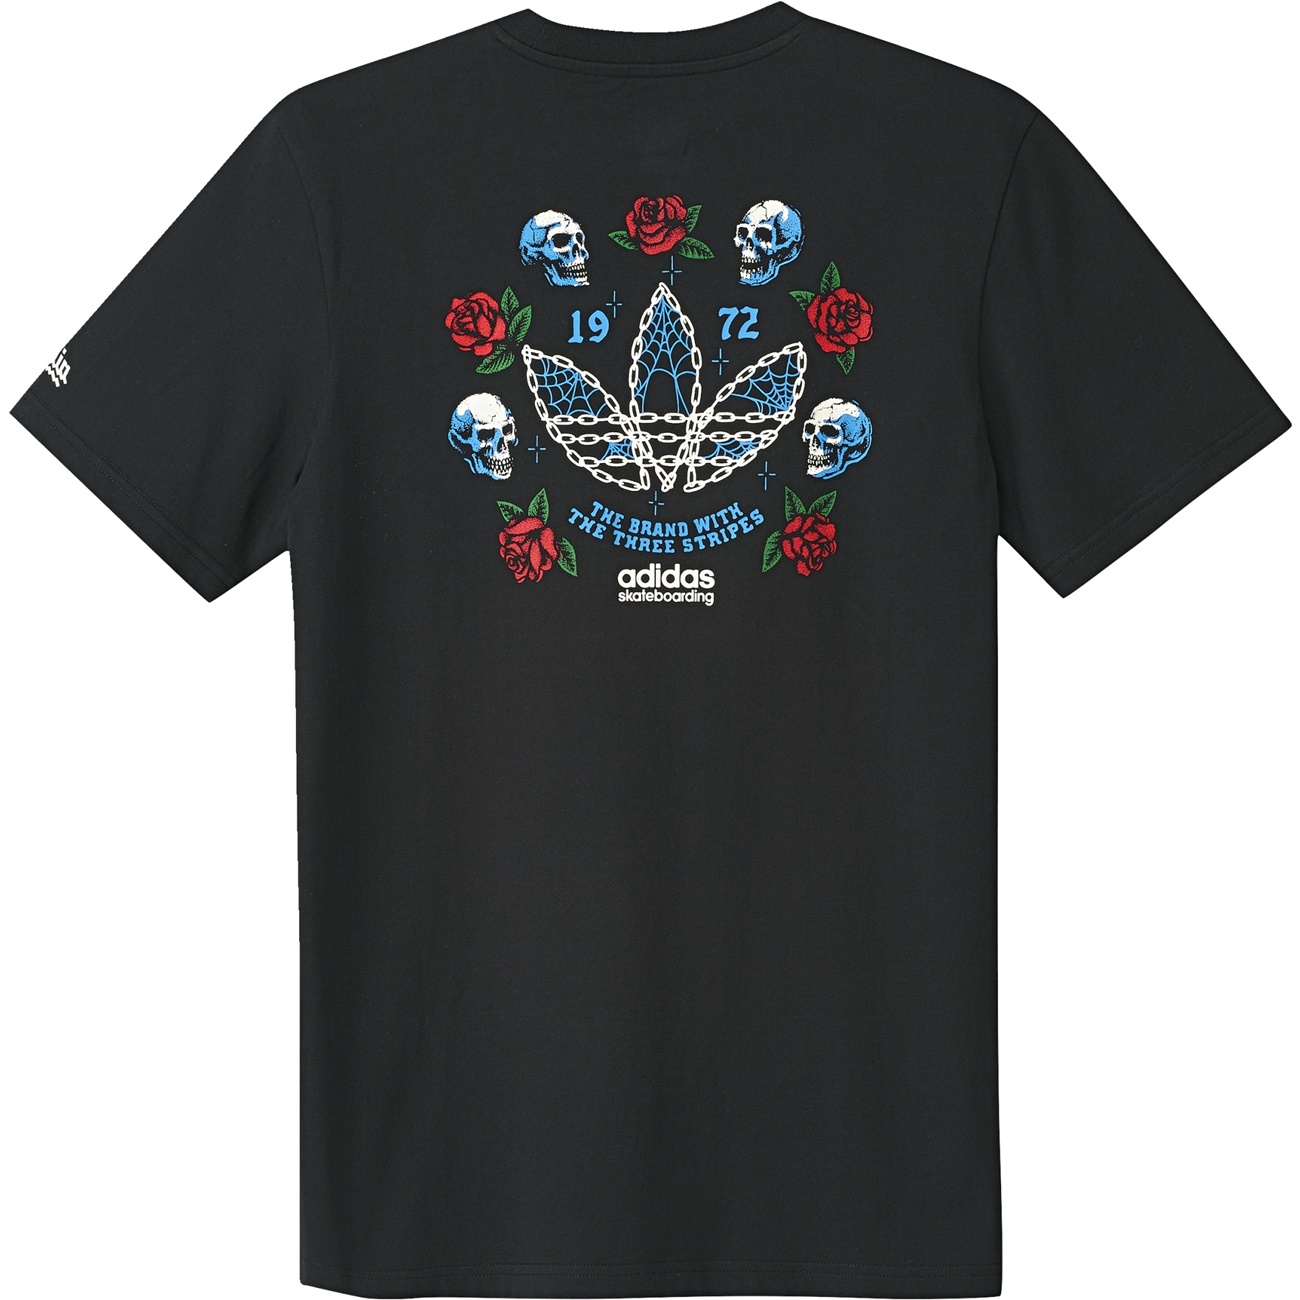 Andes Pies suaves silencio Adidas Originals Skaters Shackles T-Shirt (Black)